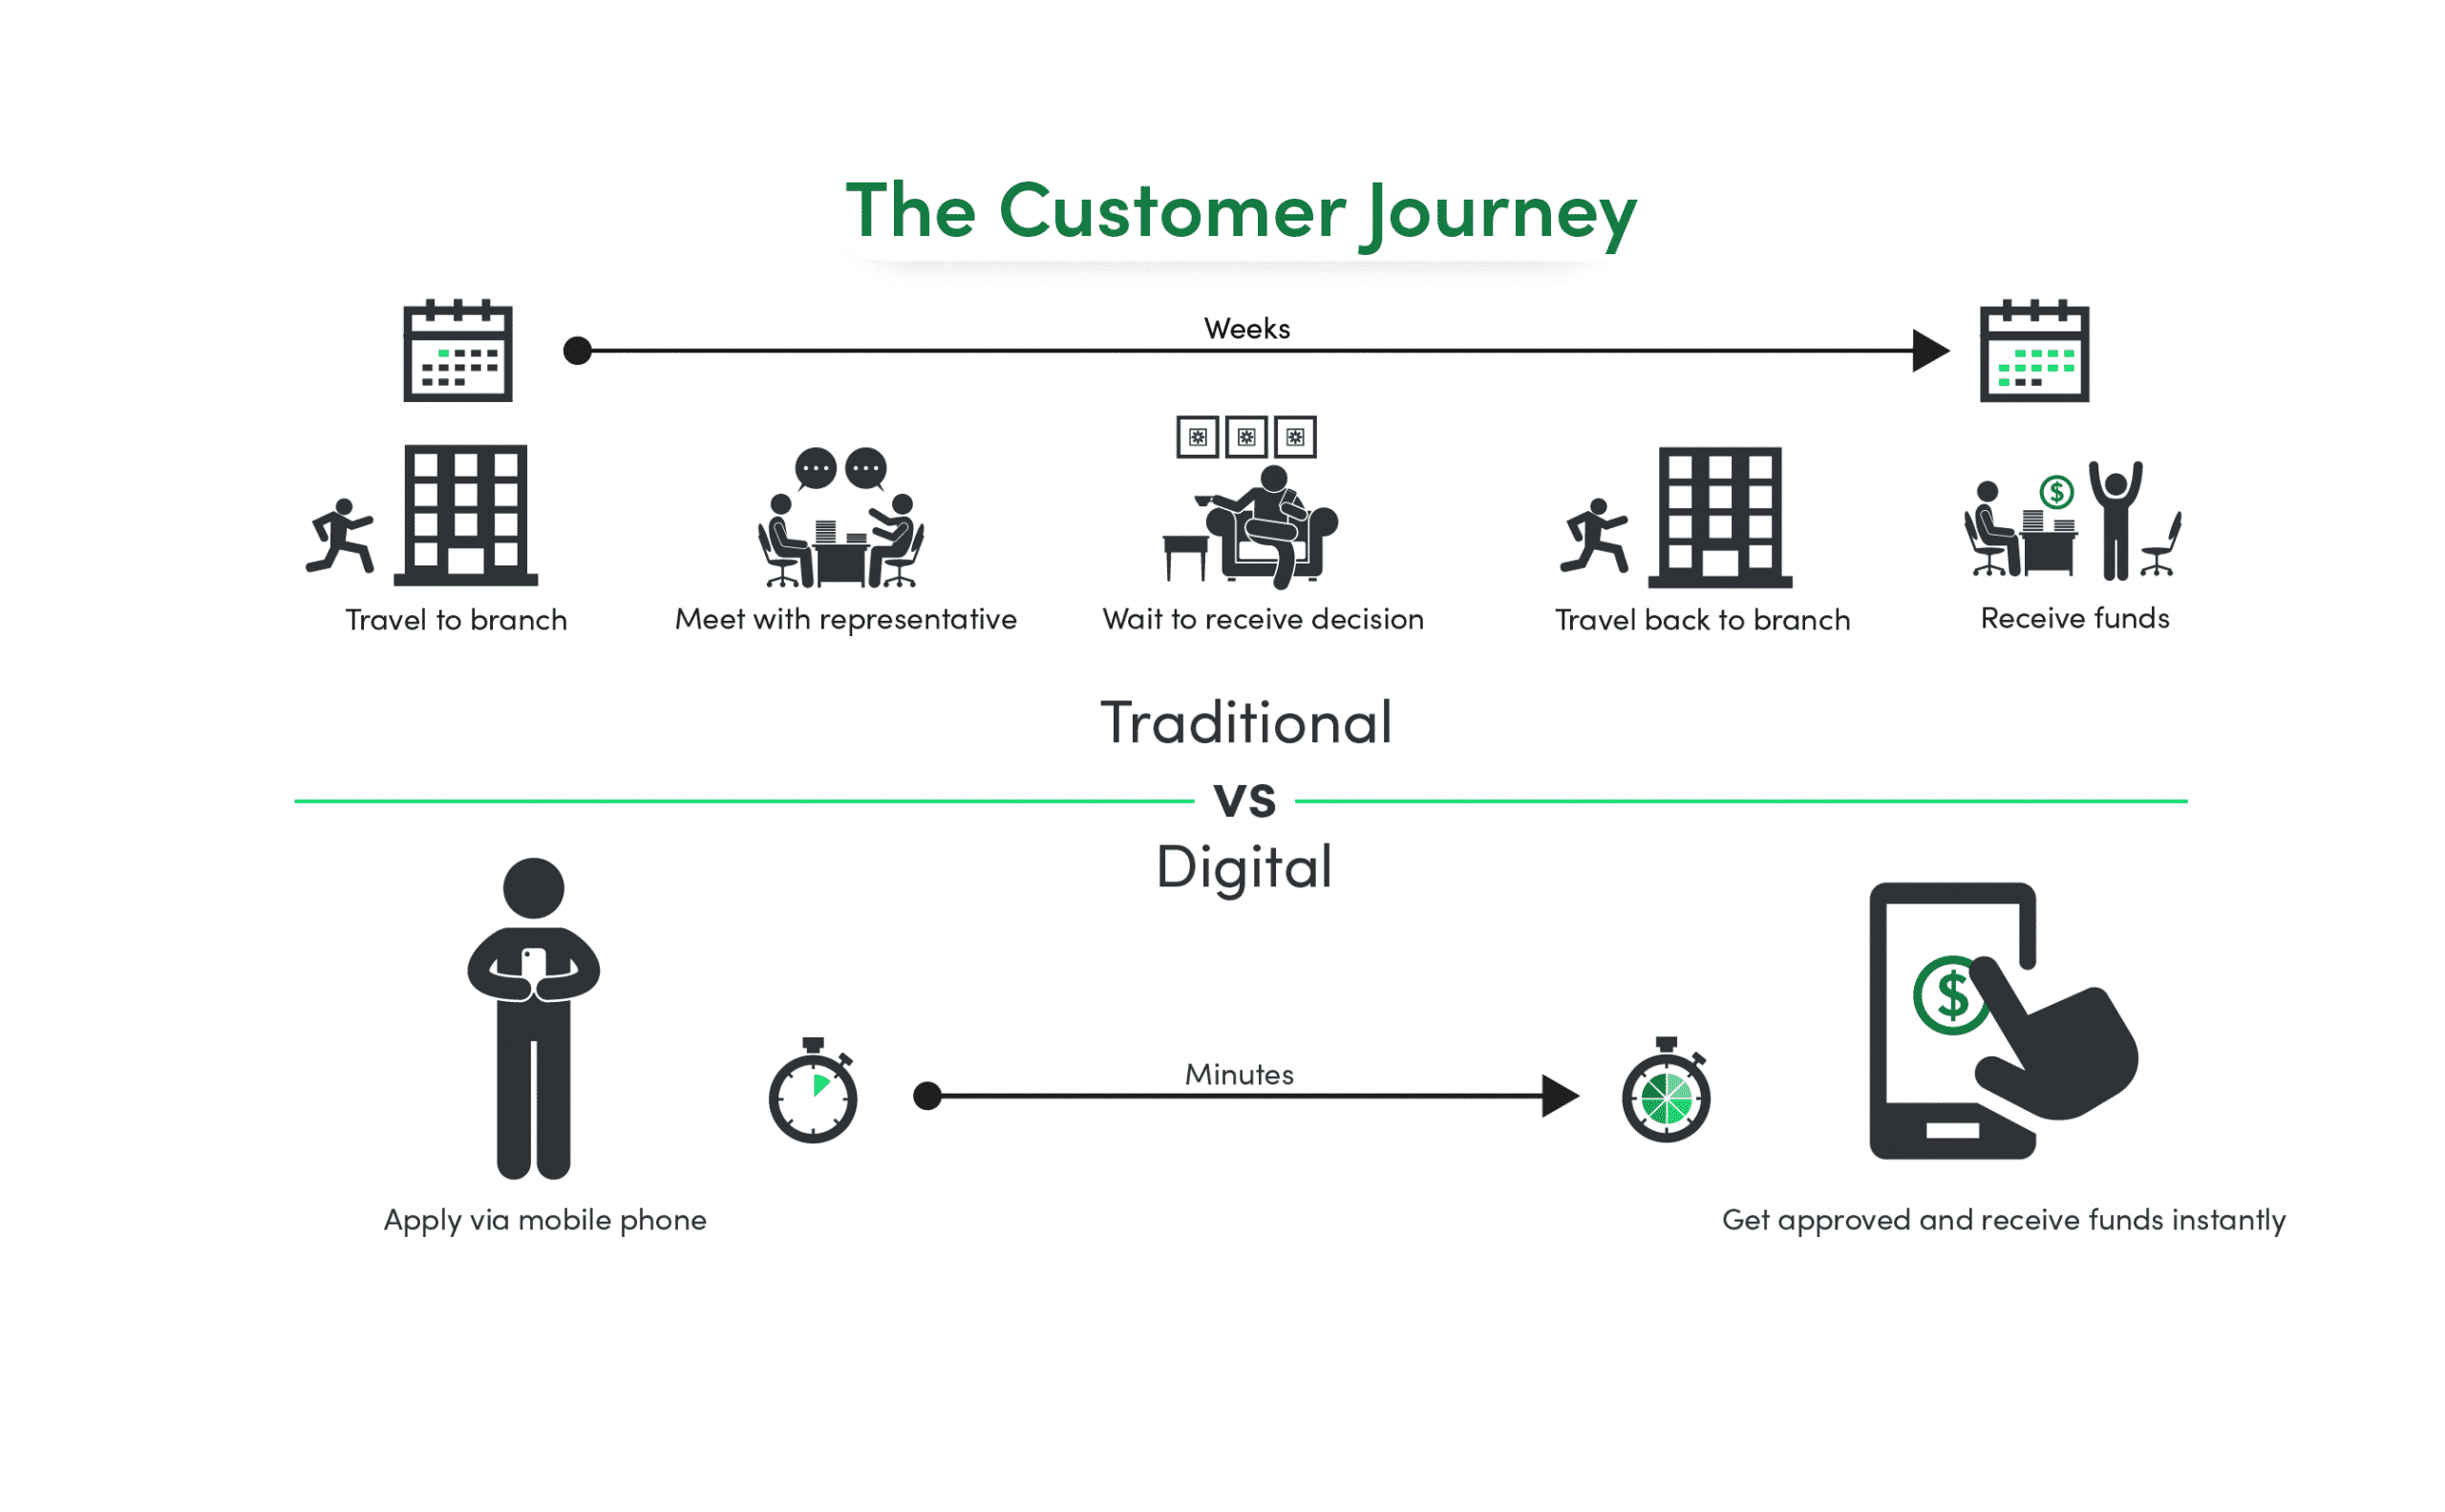 Customer journey tradditional vs digital in banking